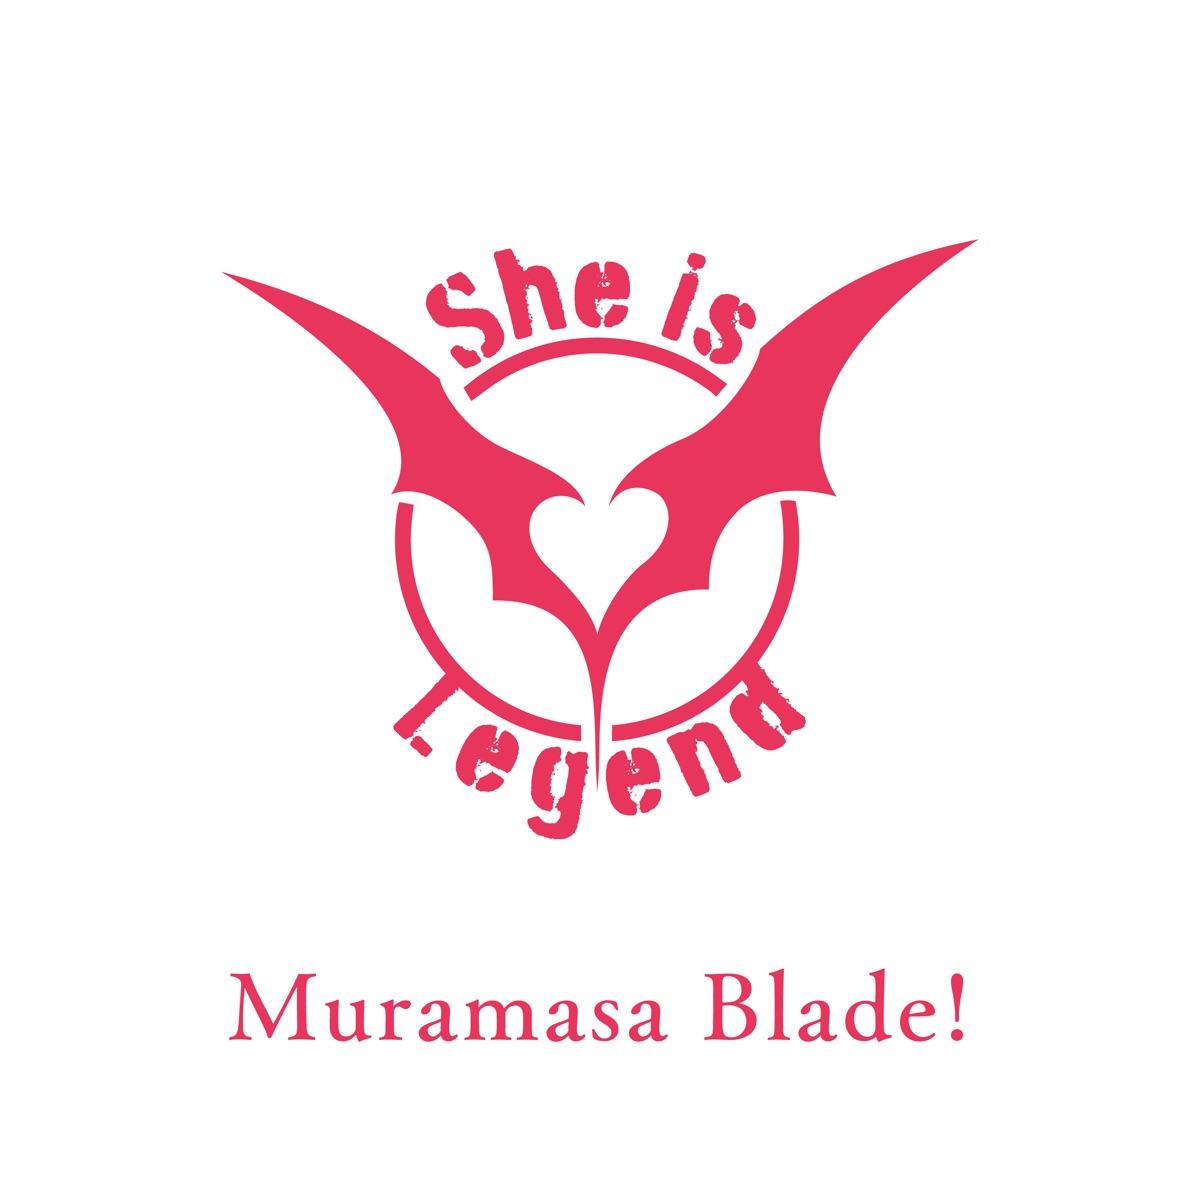 Cover art for『She is Legend - Muramasa Blade!』from the release『Muramasa Blade!』